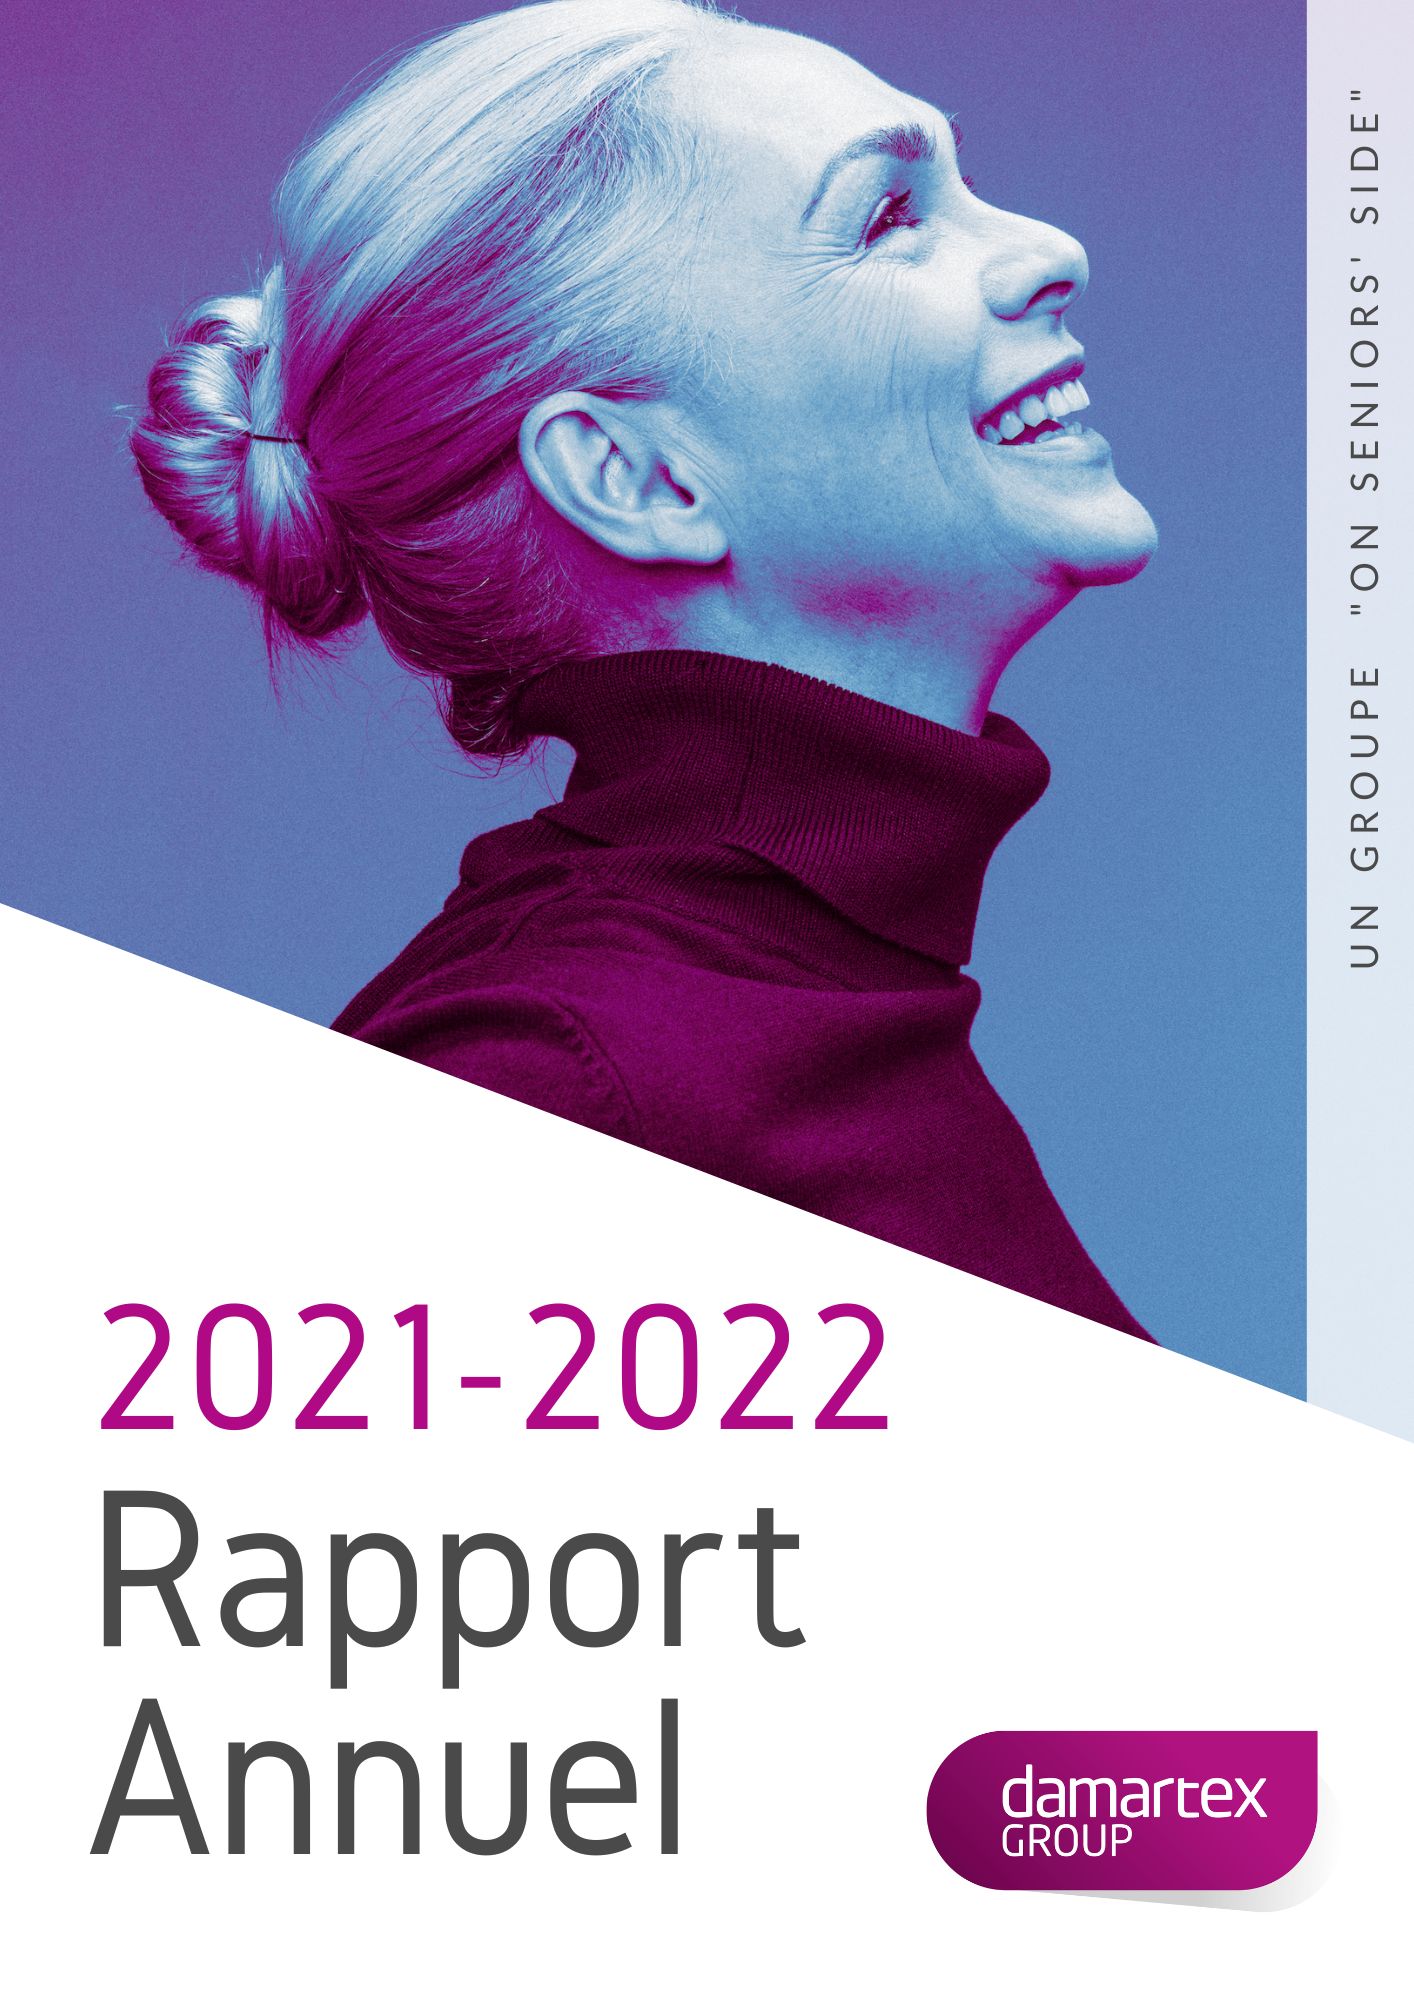 Annual report 2021 - 2022